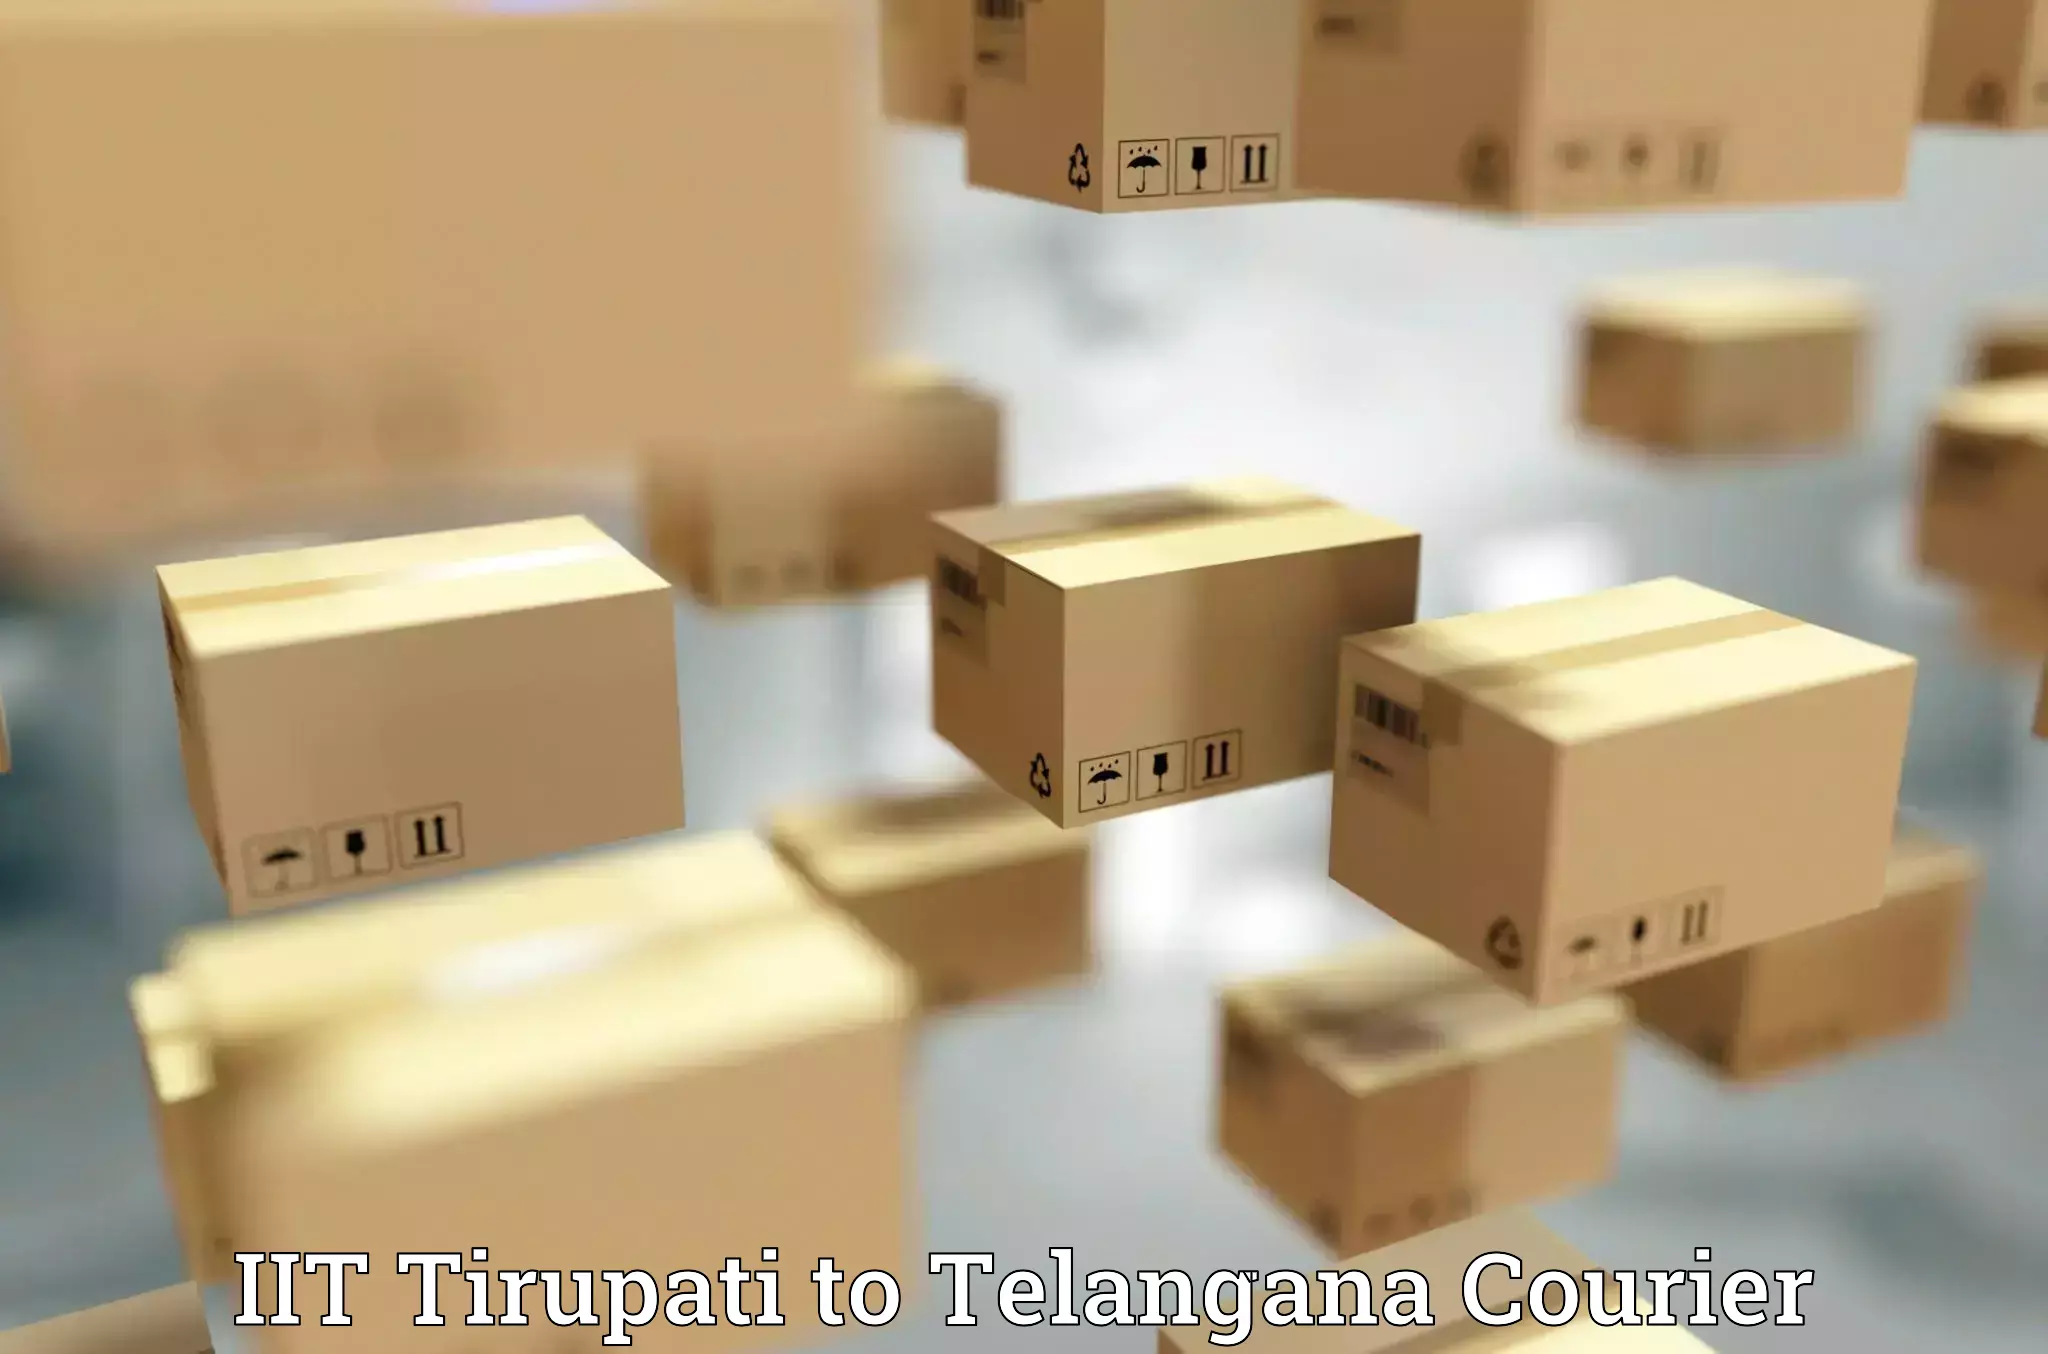 Courier service innovation in IIT Tirupati to Sircilla